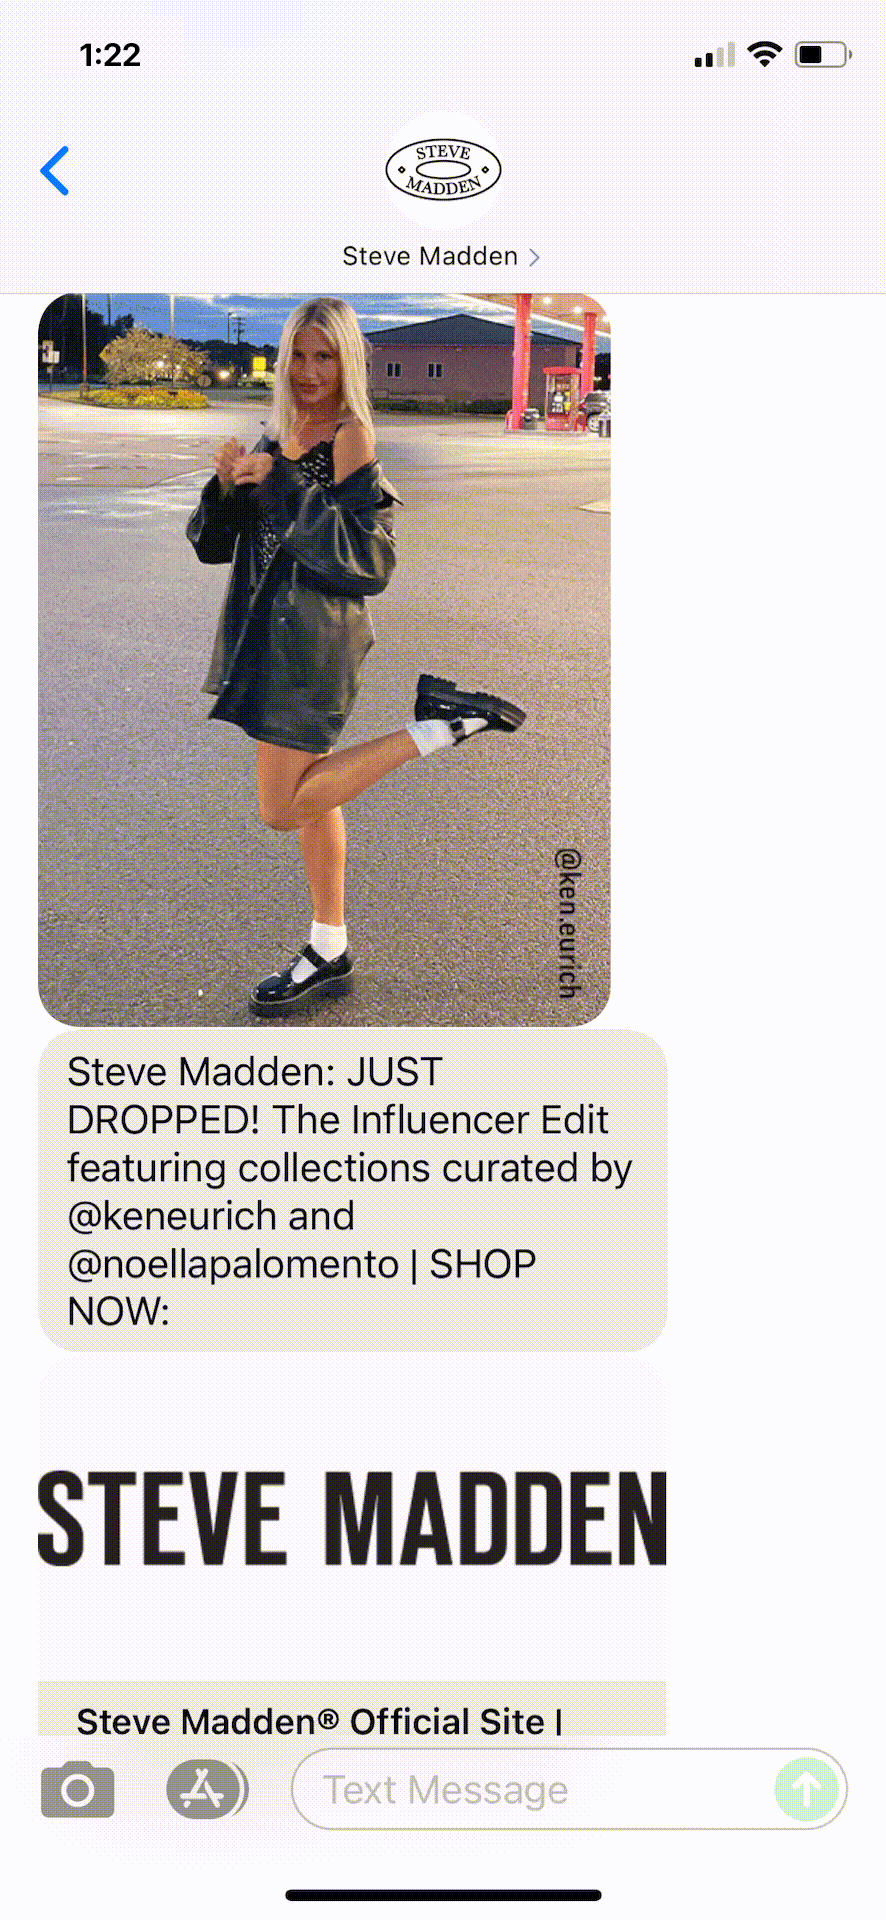 Steve-Madden-Text-Message-Marketing-Example-07.15.2021